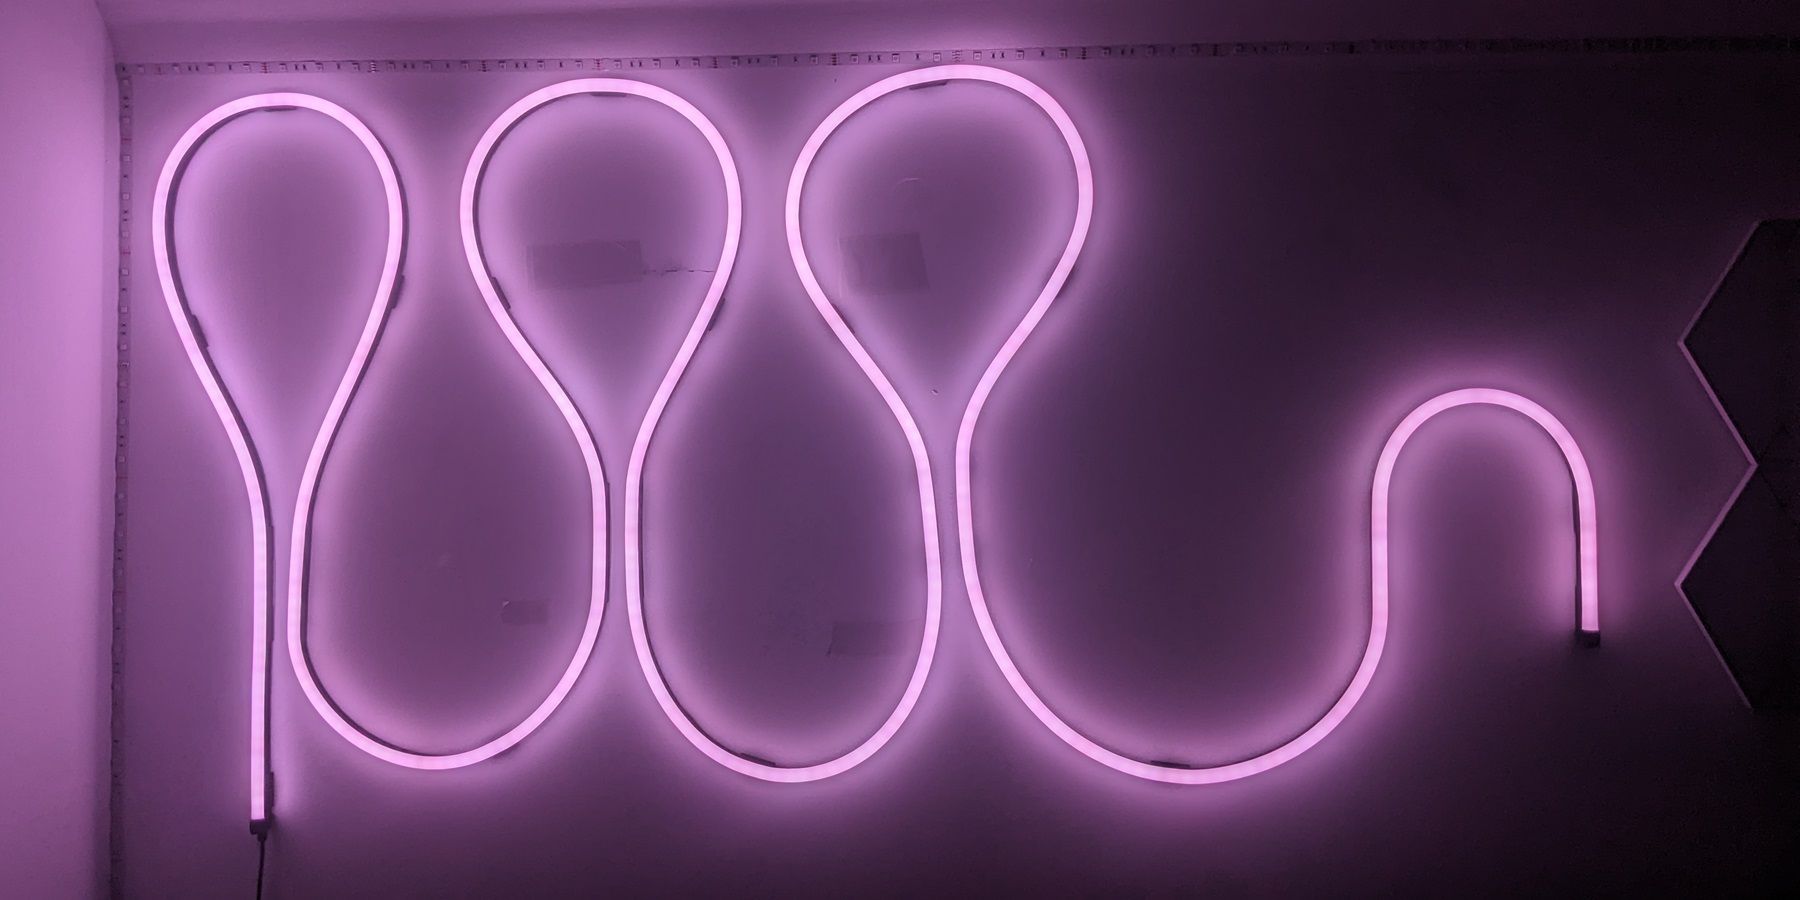 Govee Neon Rope Light Performance #4